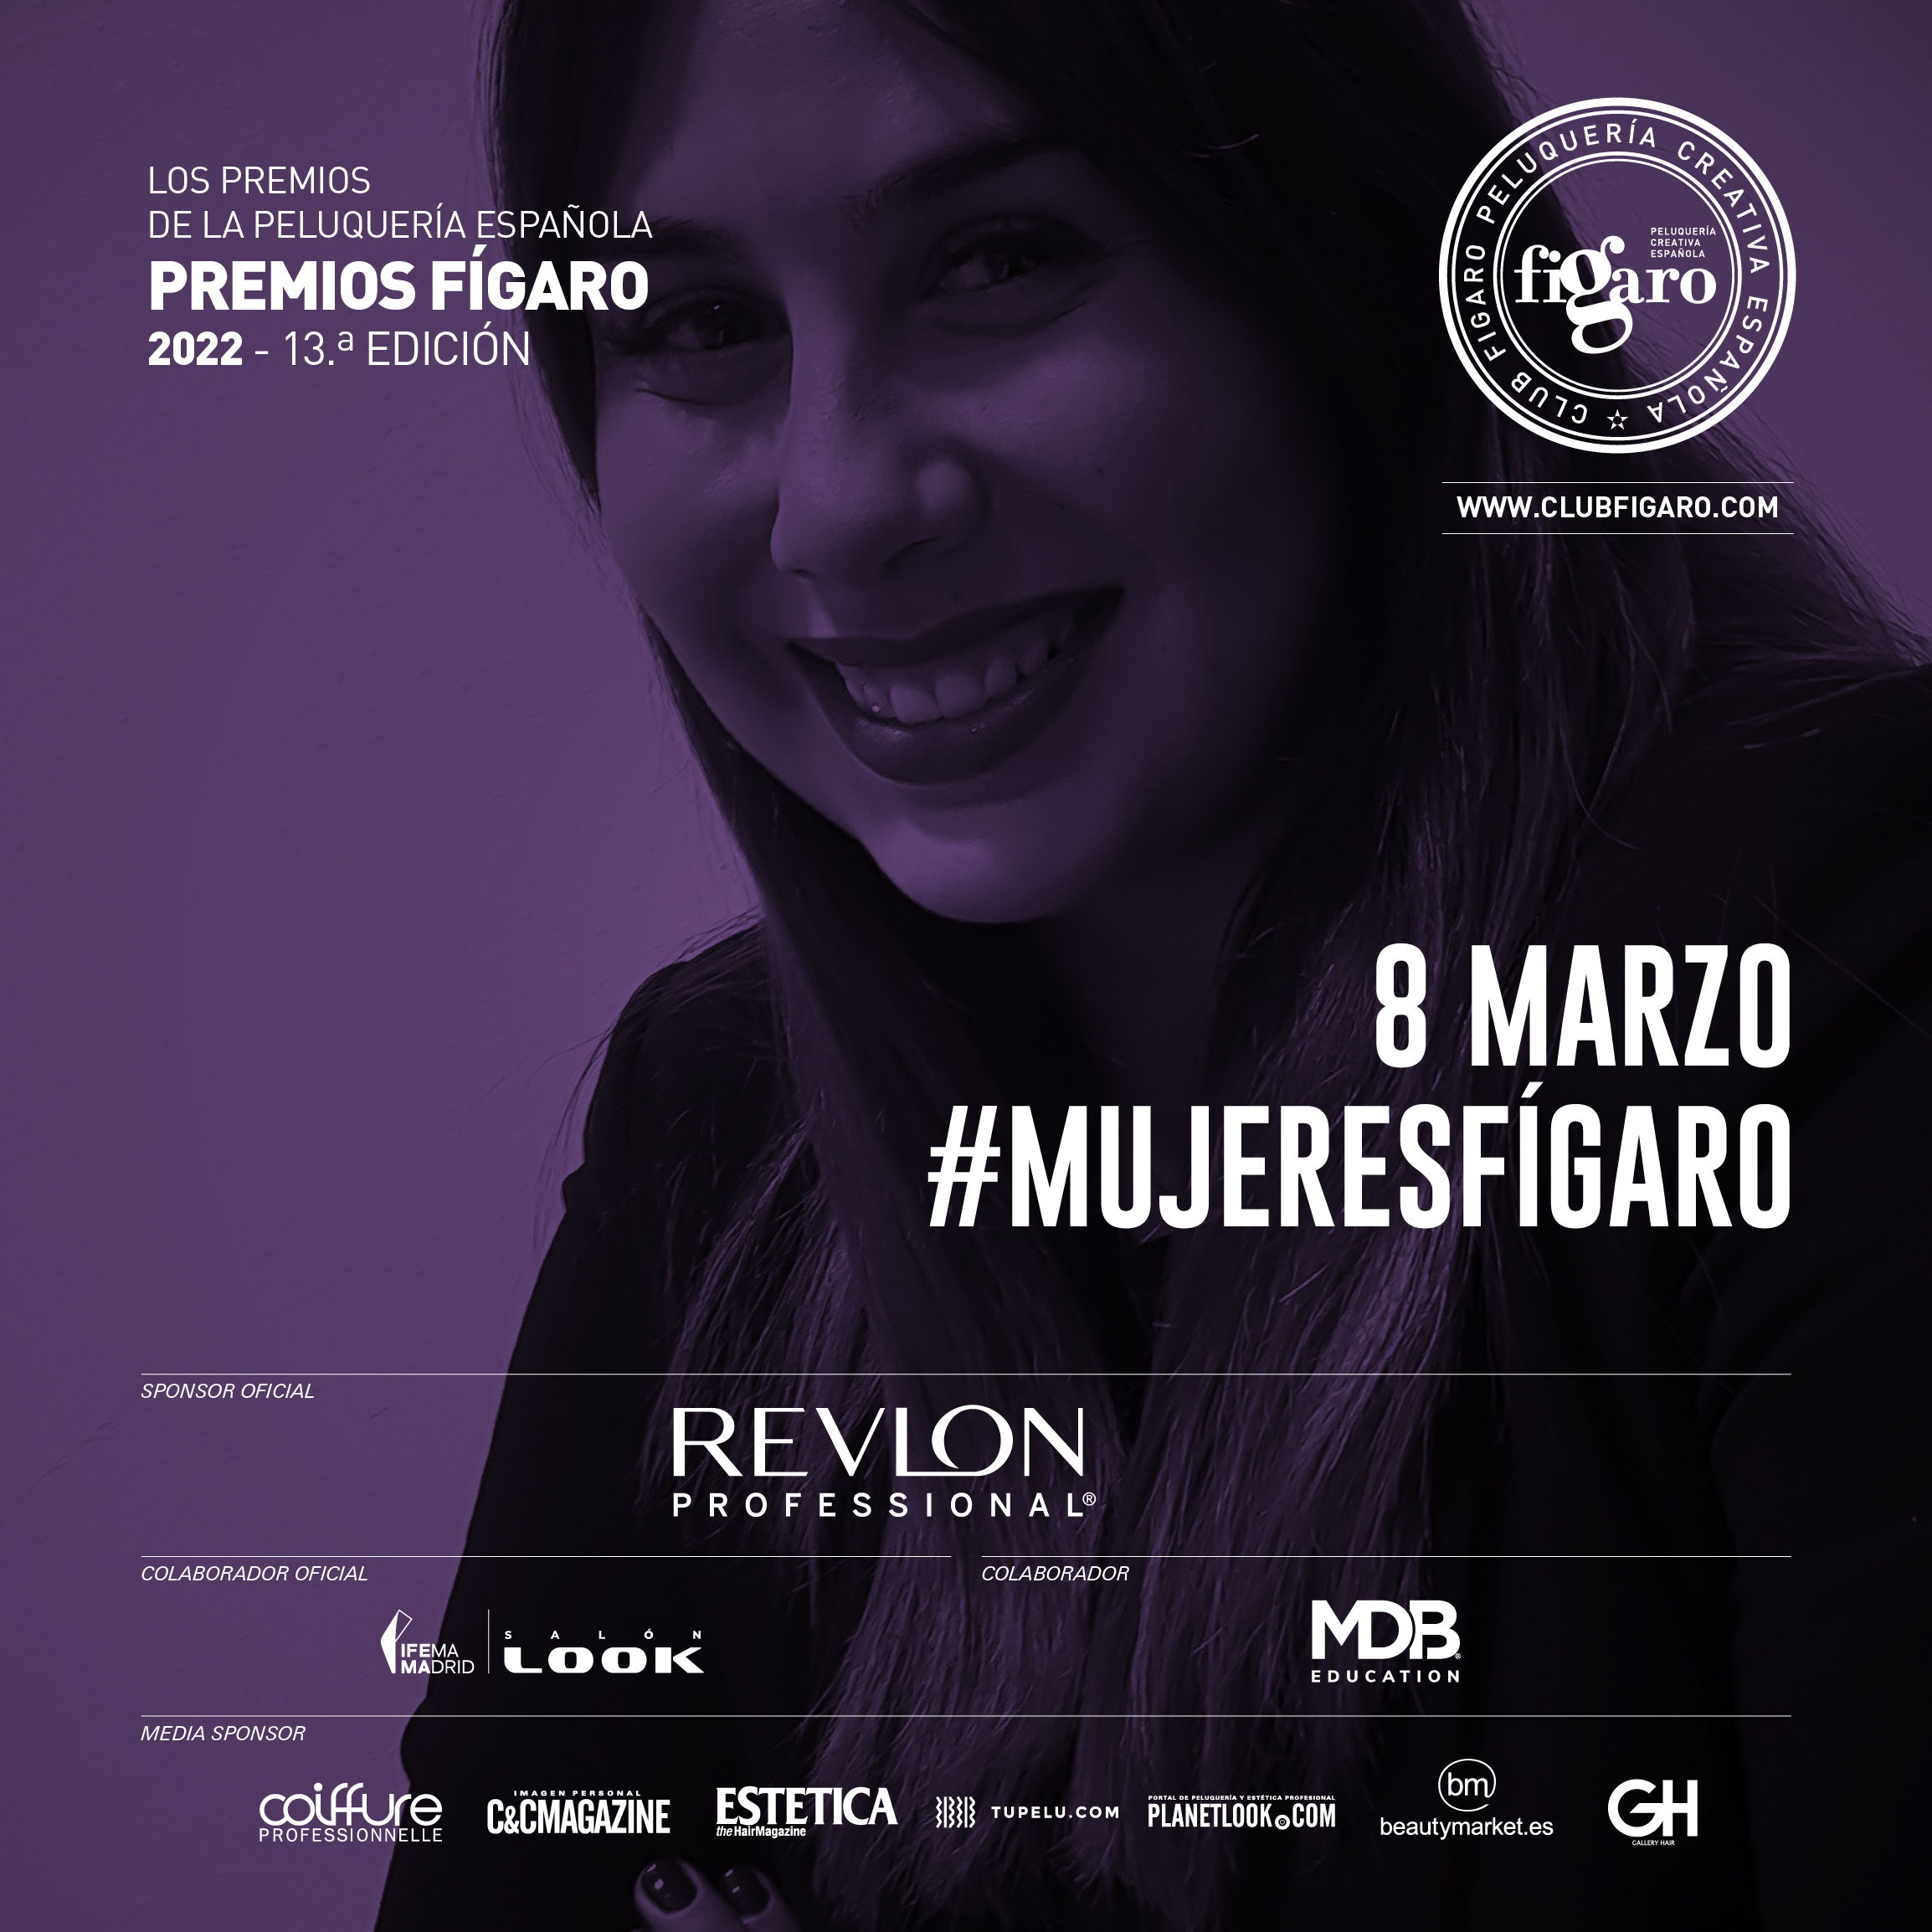 Paula Alonso, finalista categoría Peluquer@ Revelación y ganadora Pasarela Fígaro - Premios Fígaro 2021